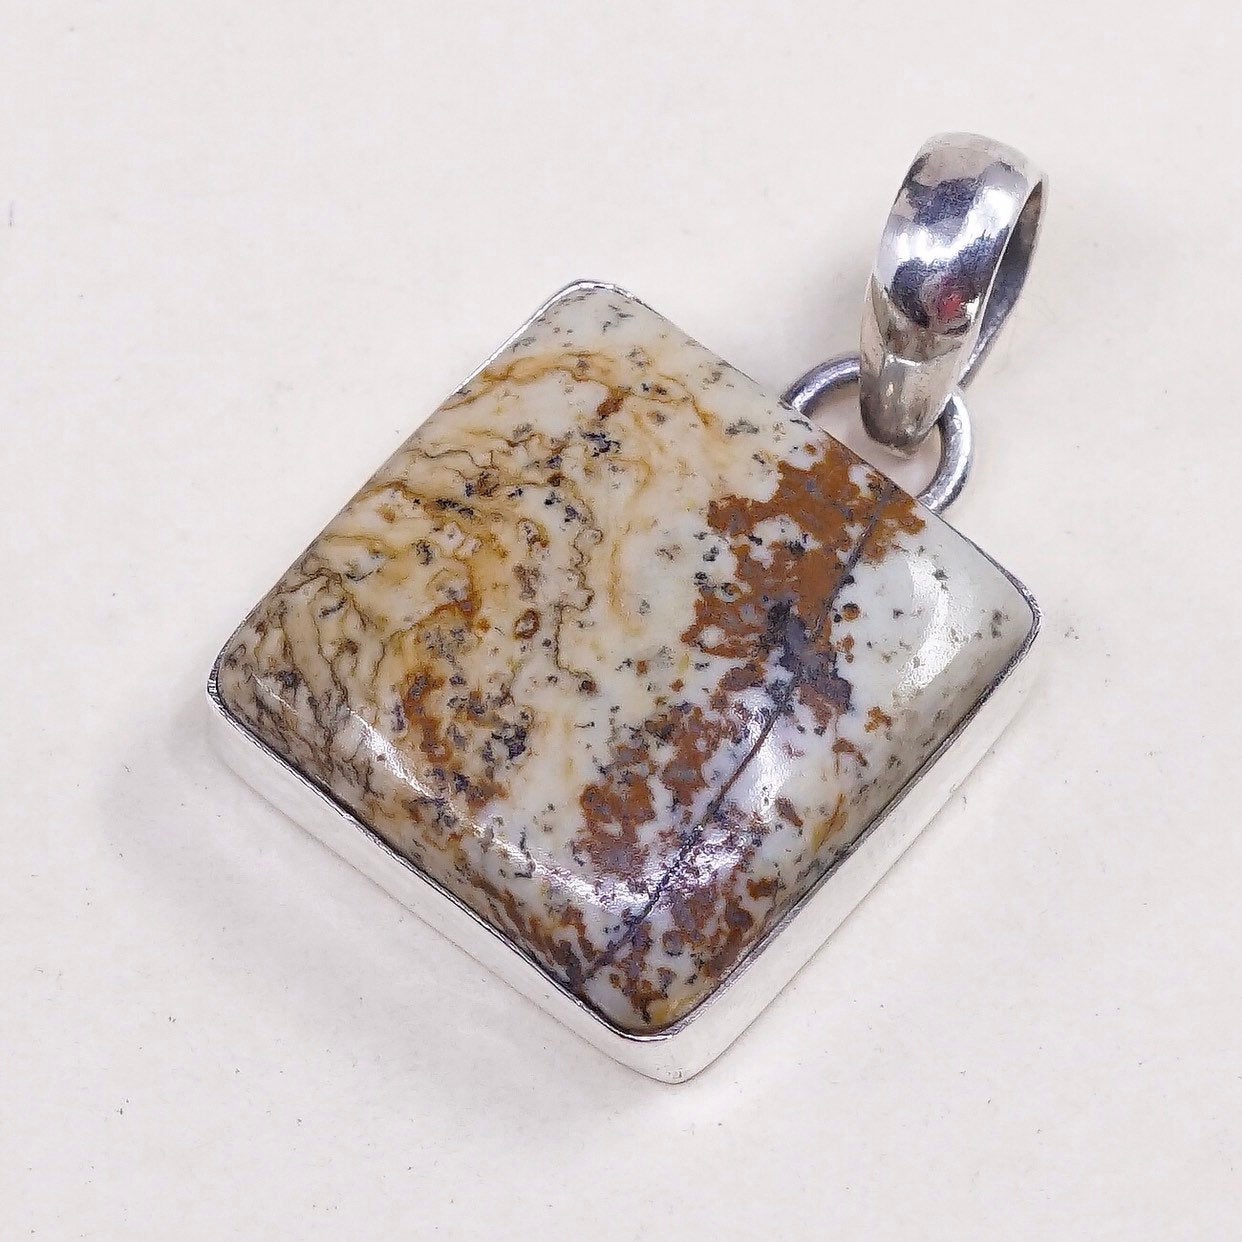 VTG sterling silver handmade pendant, solid 925 silver with square jasper